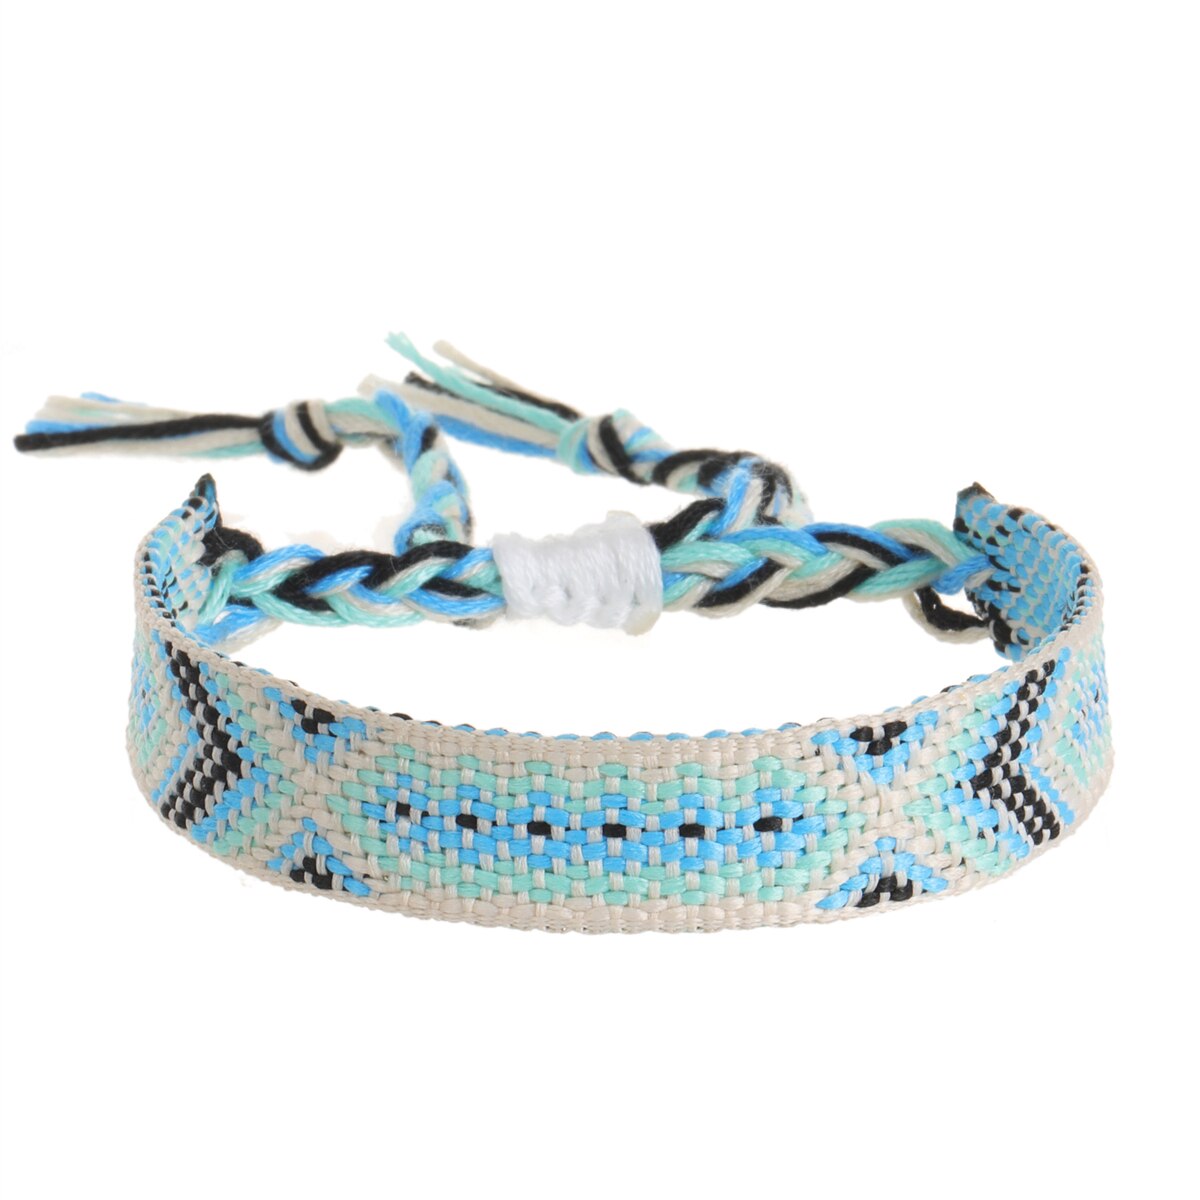 Wide Woven Bracelet Bulk for Women, Kids & Girls - Nepal Style Friendship Bracelets Handmade Braided Rope Wrist String Chain